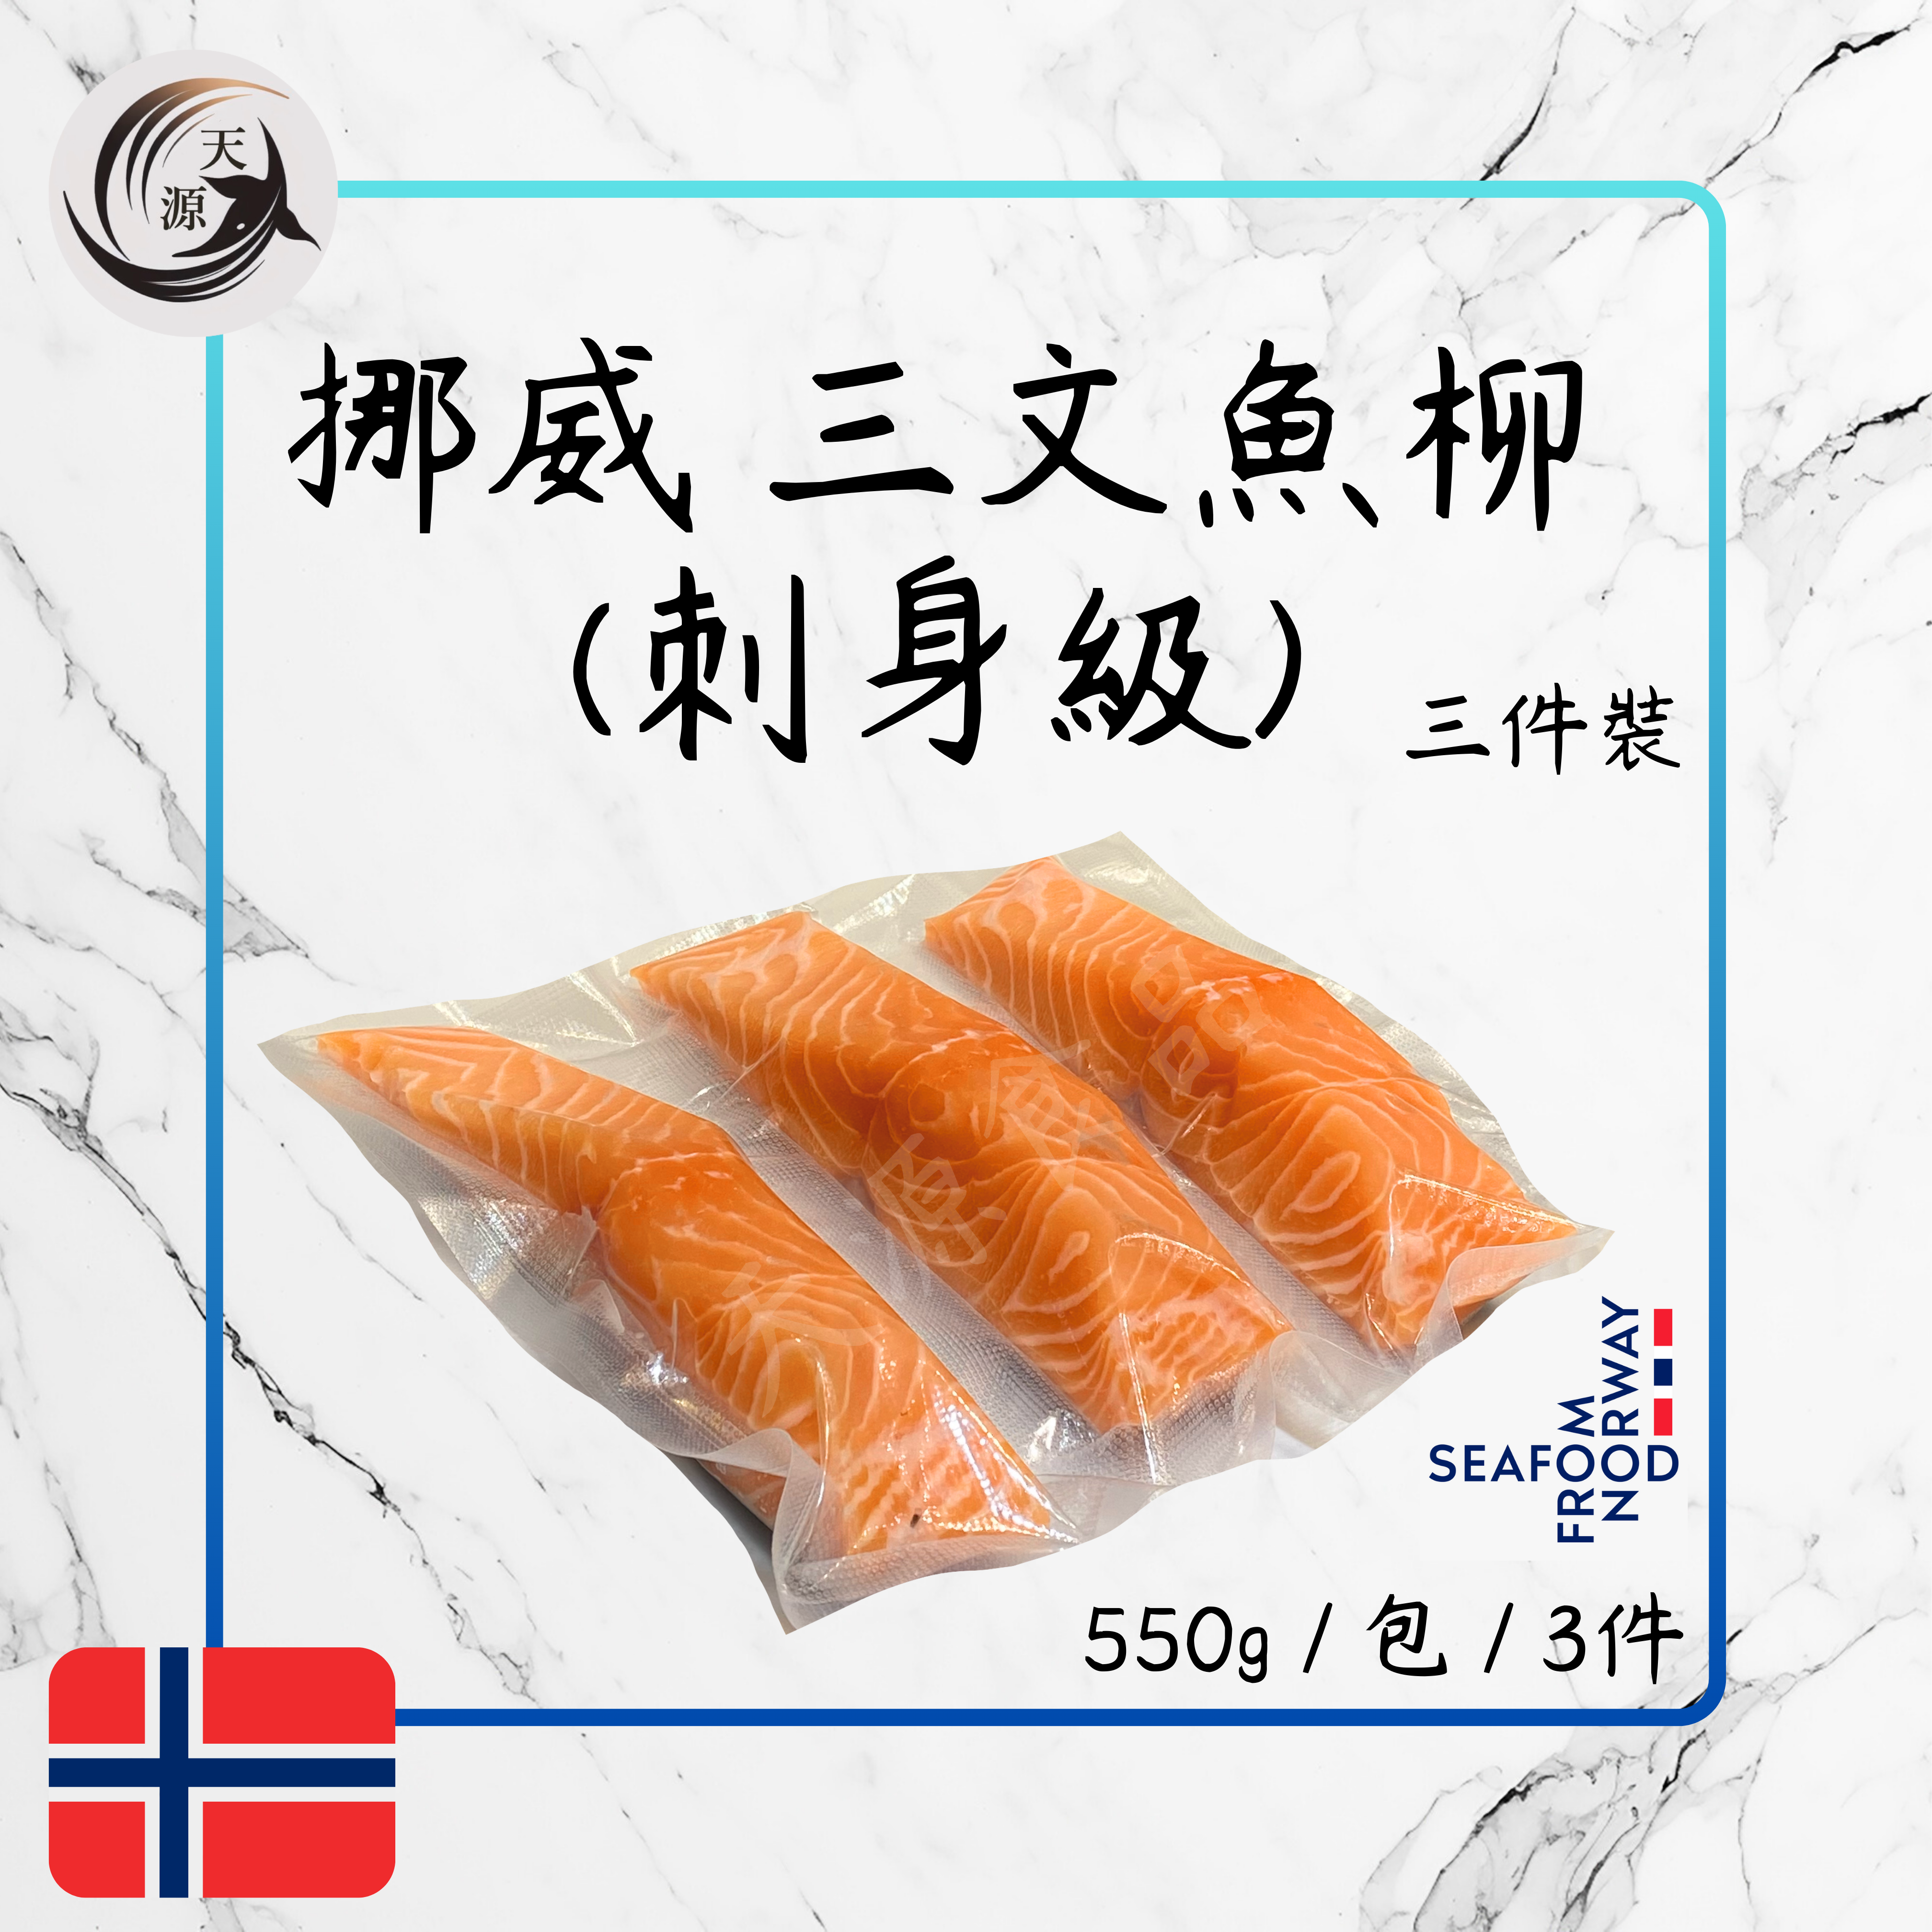 Norwegian Salmon Fillet (Sashimi Grade) Three-piece Pack